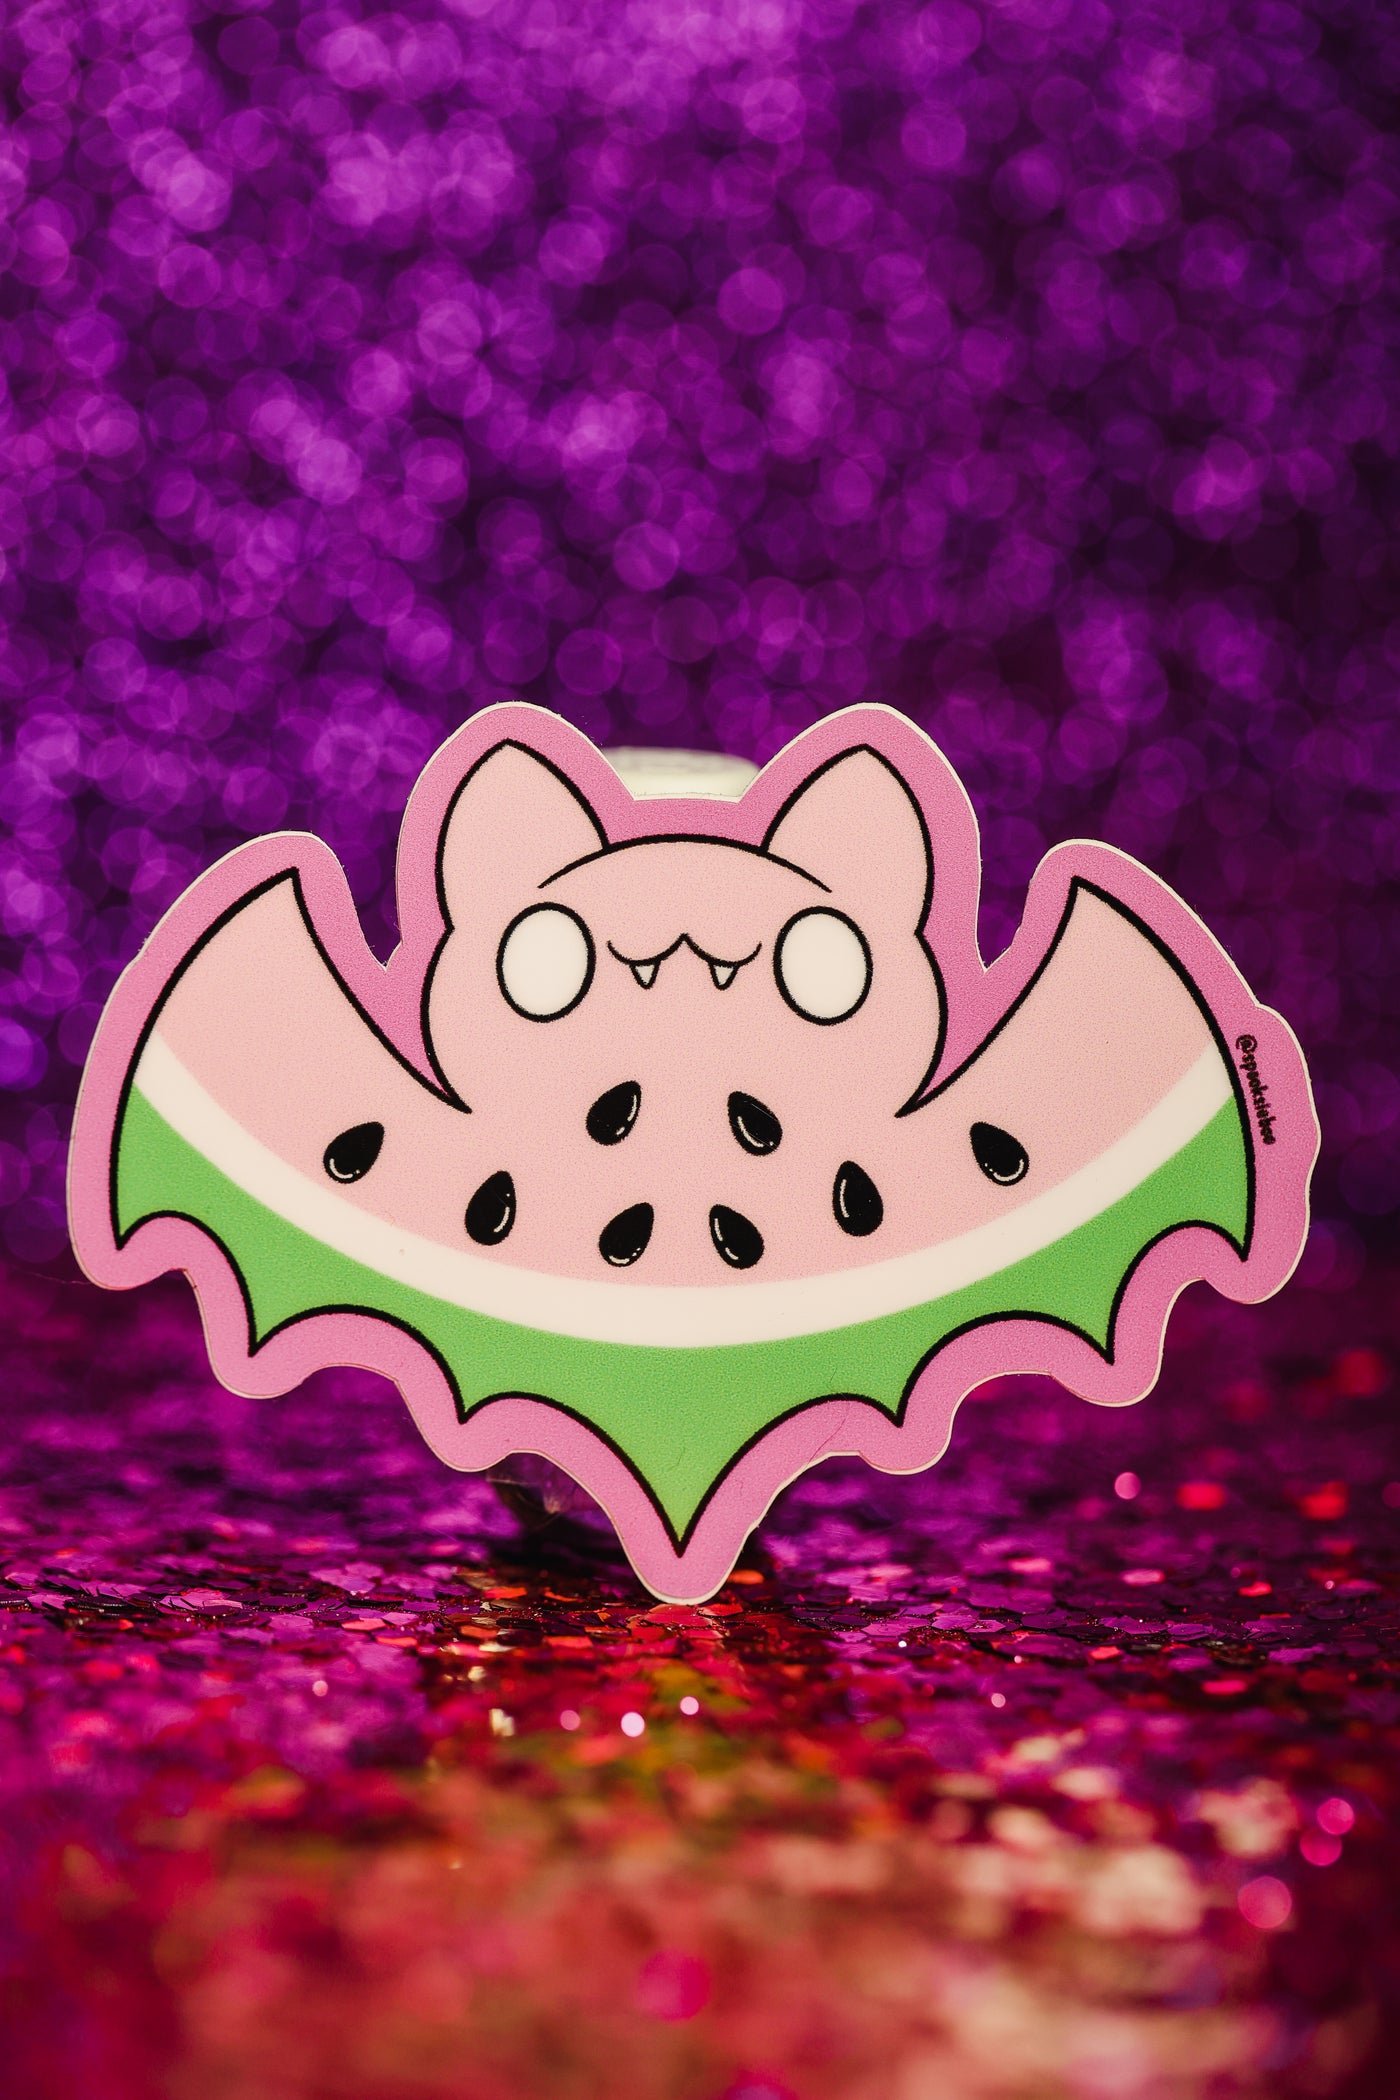 Watermelon Fruit Bat - Sticker